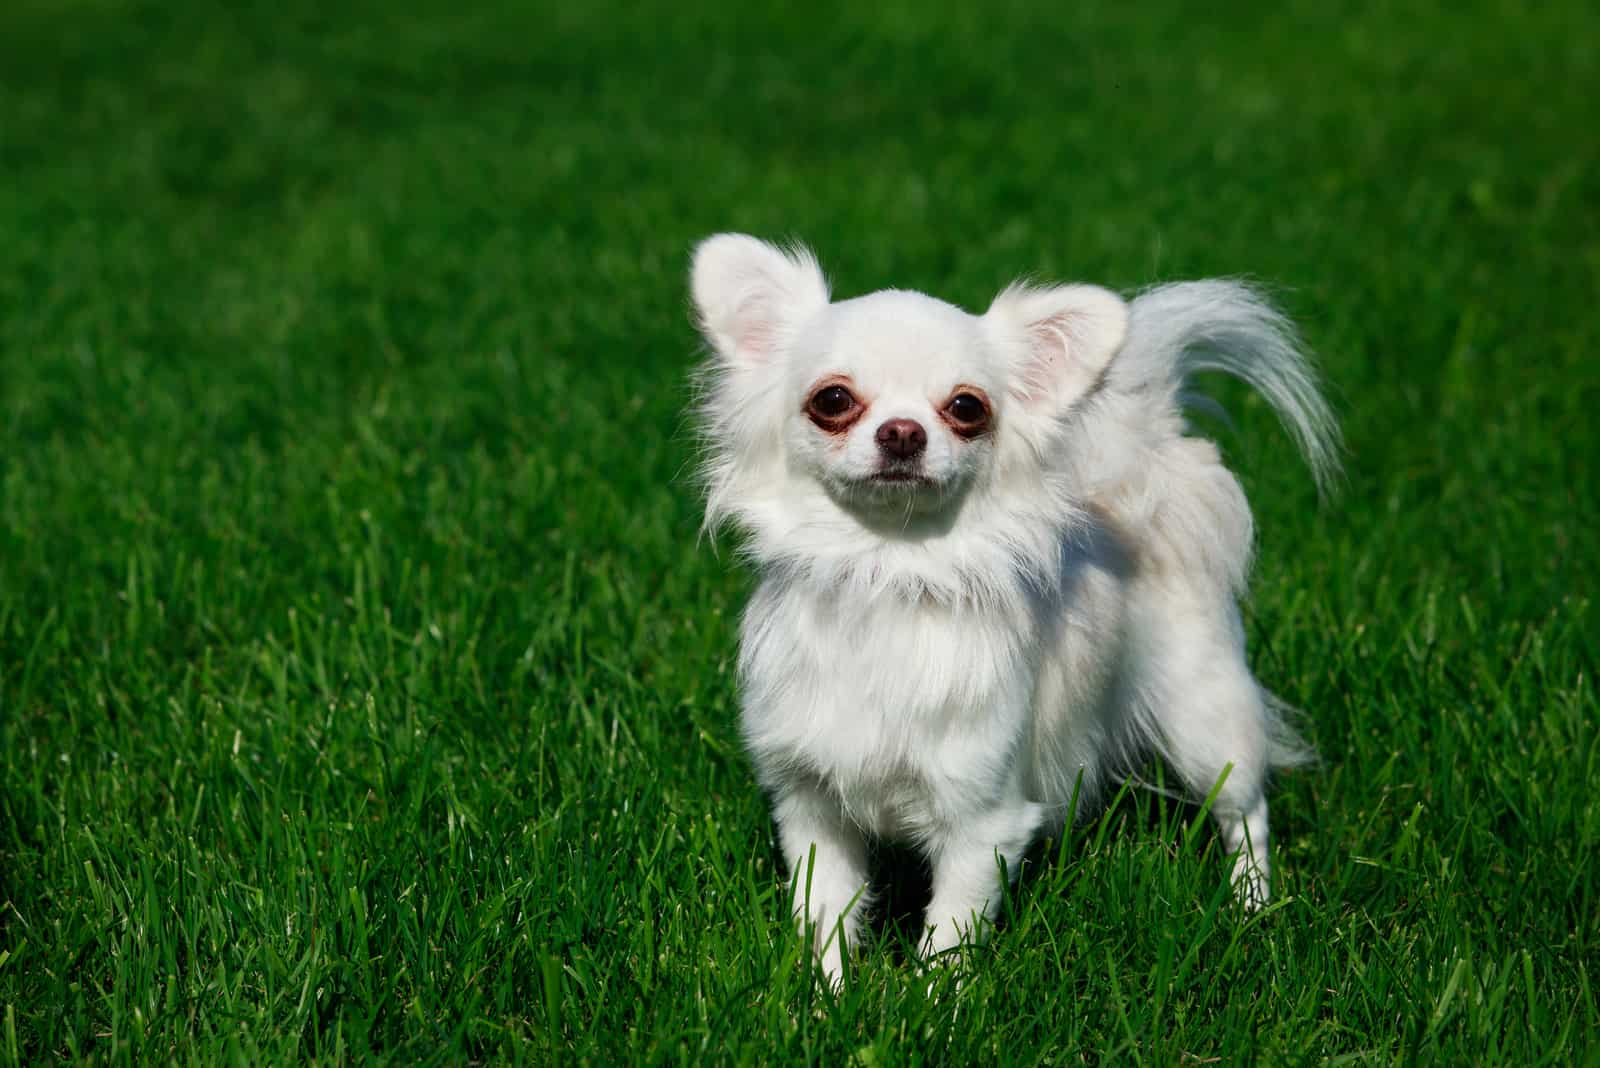 White Chihuahua: An Angel Among All Chihuahuas